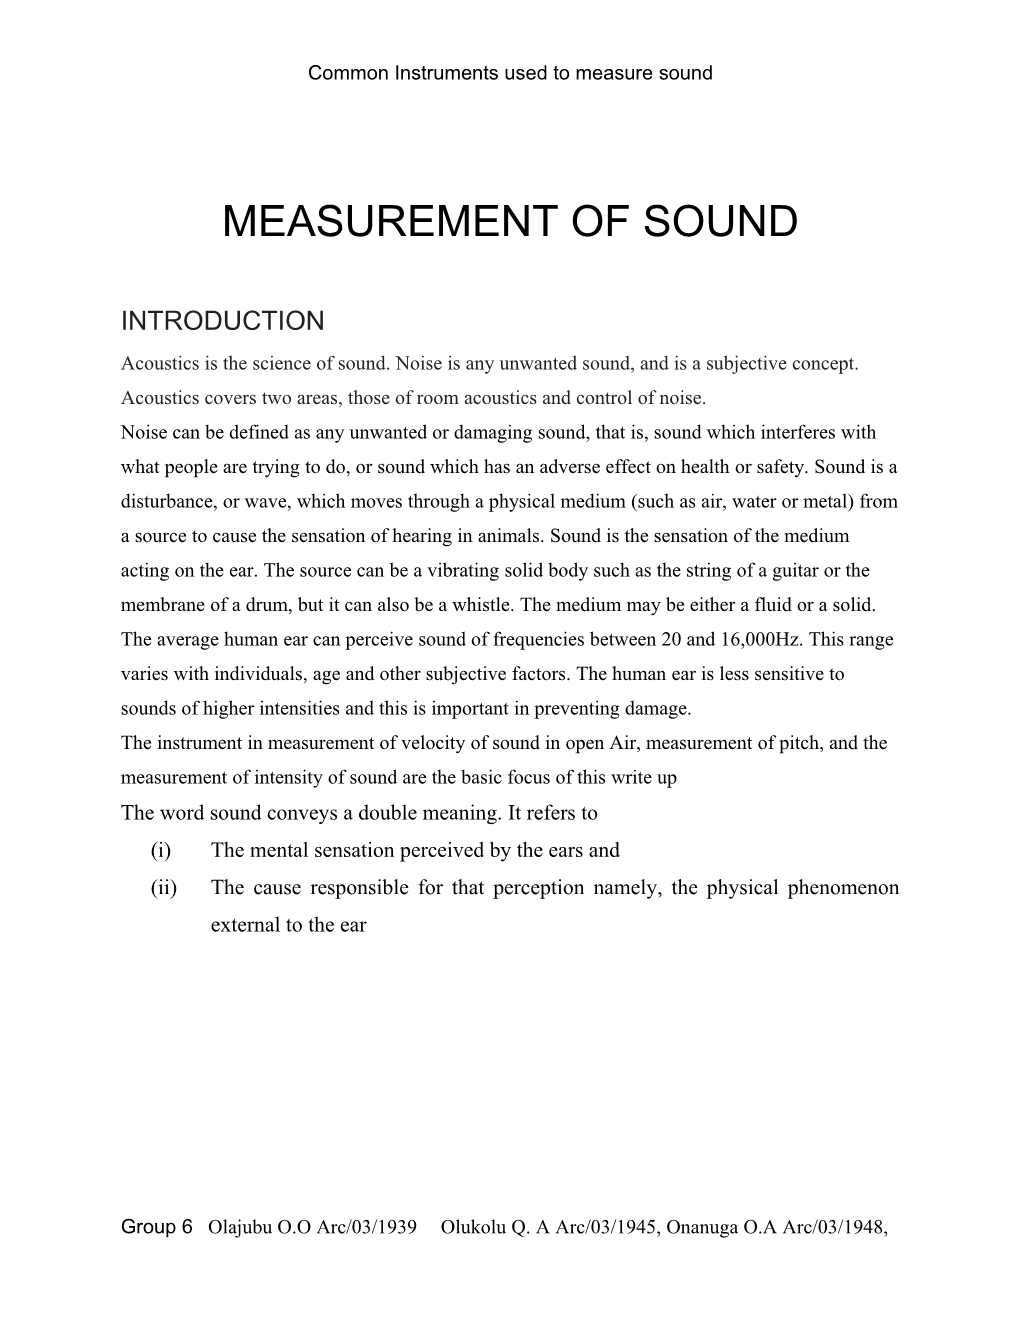 Measurement of Sound